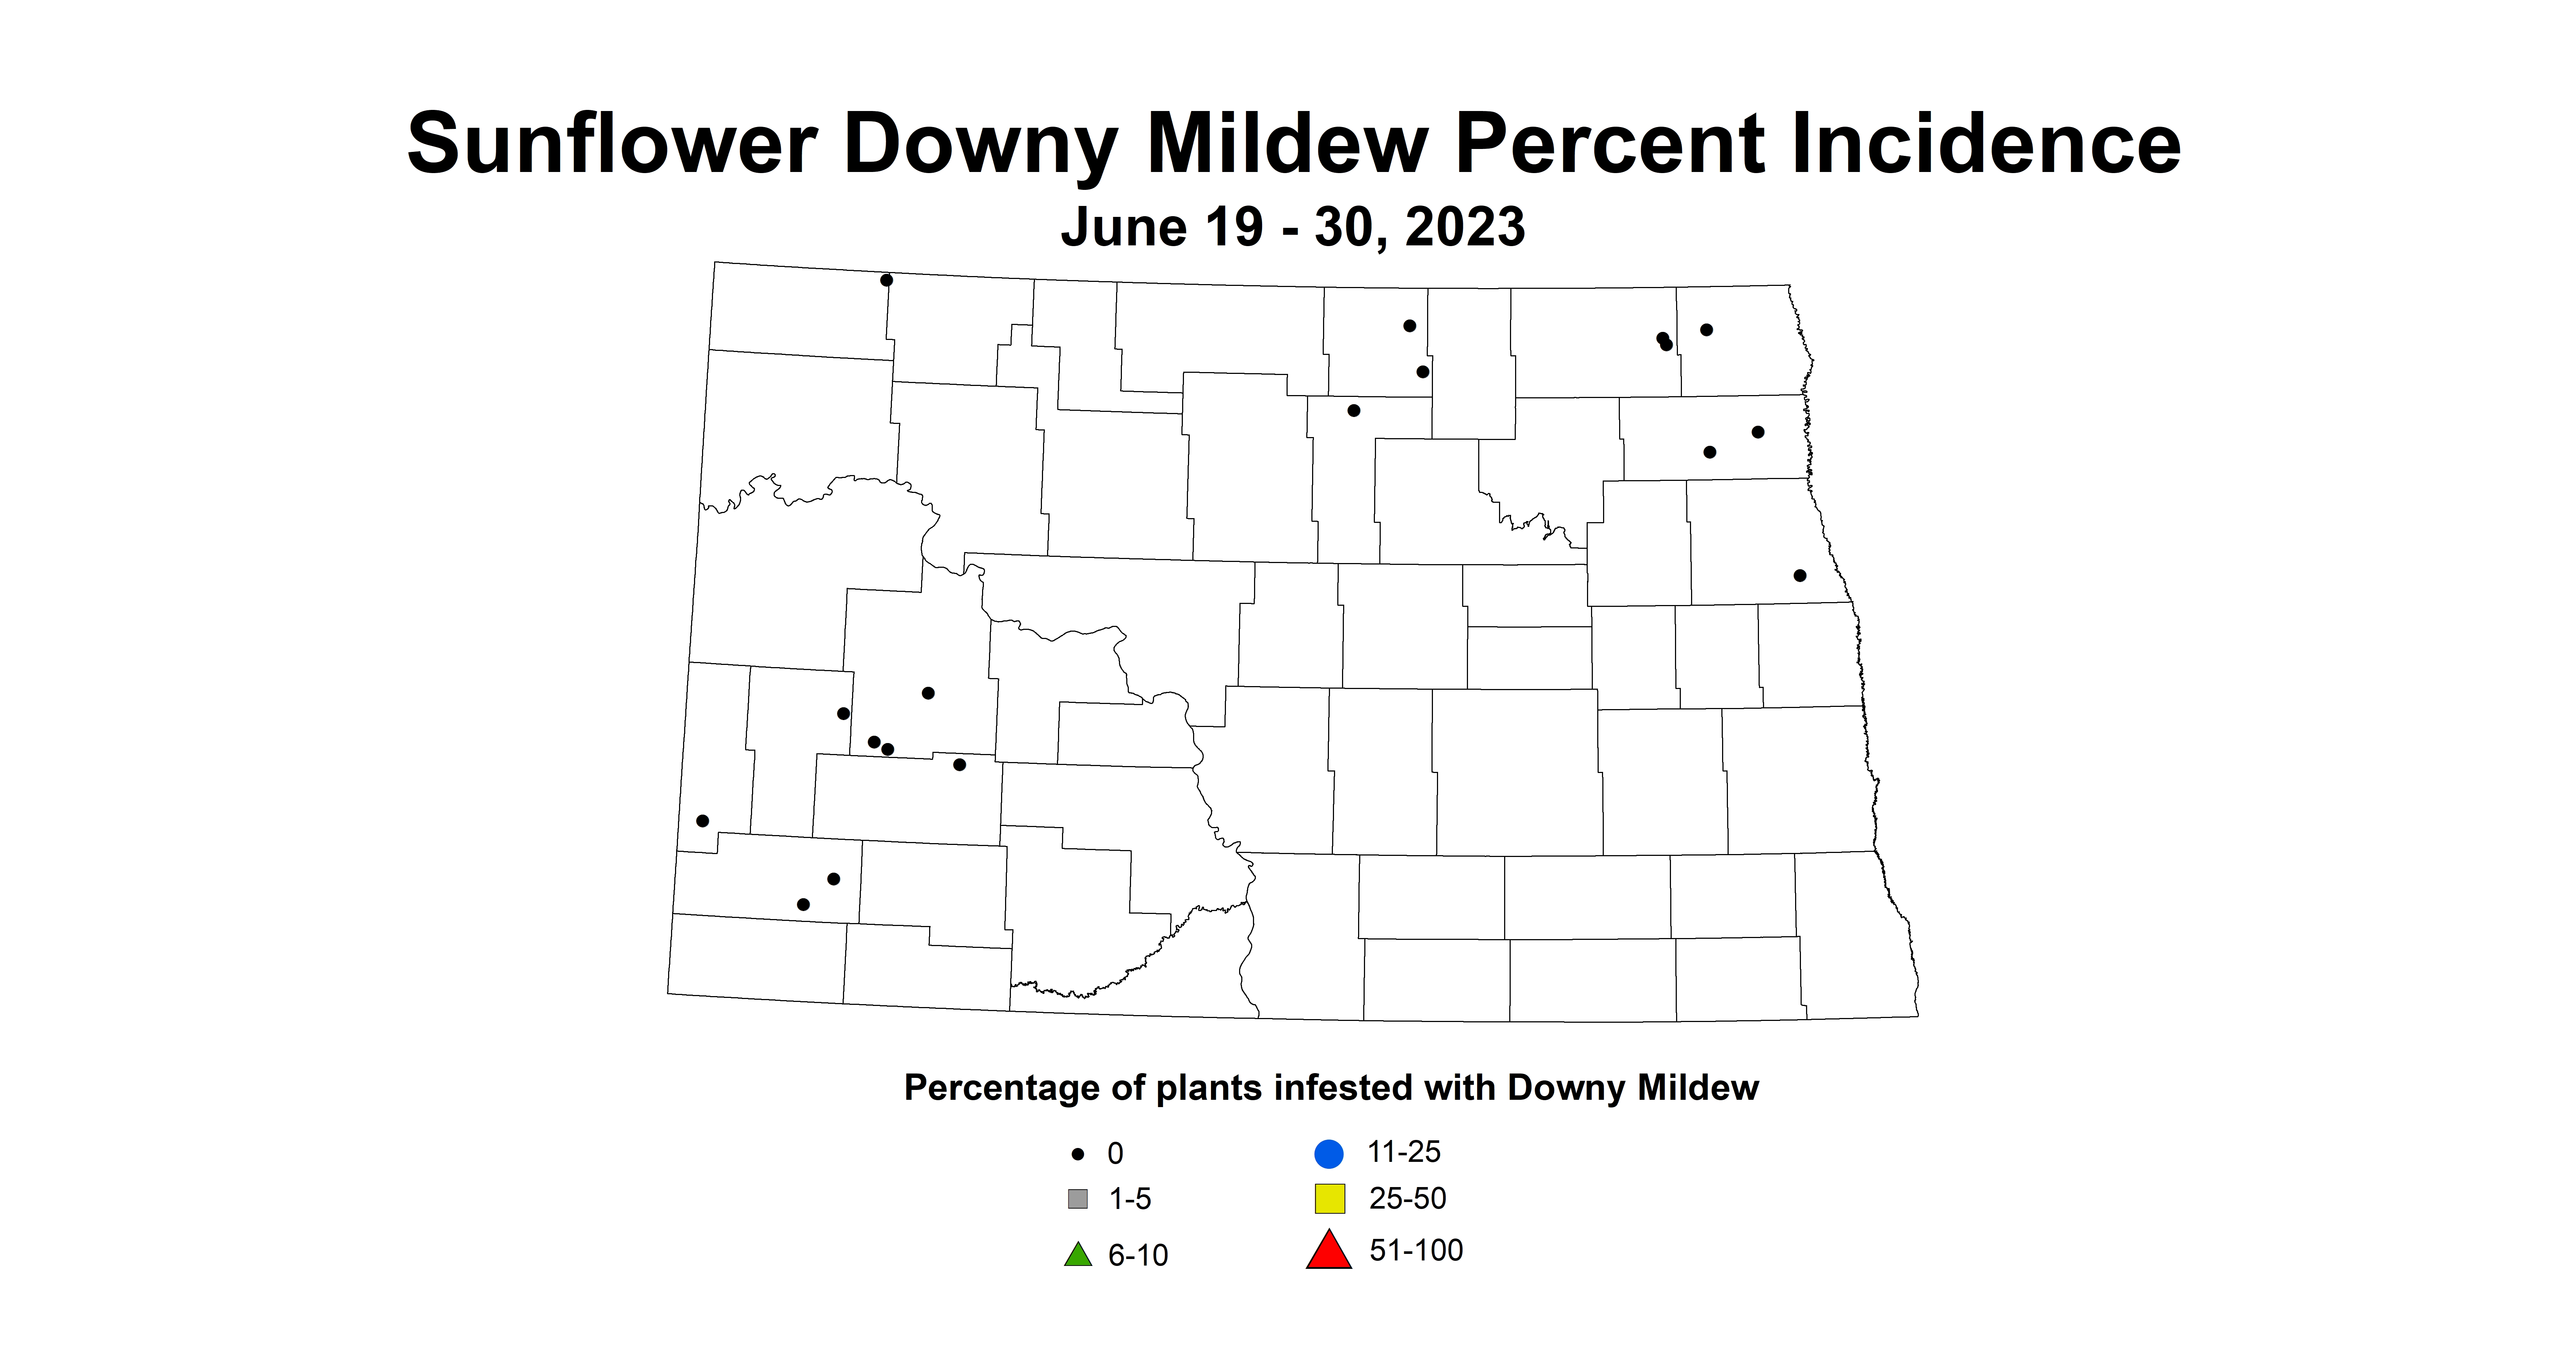 sunflower downy mildew incidence June 19-30 2023